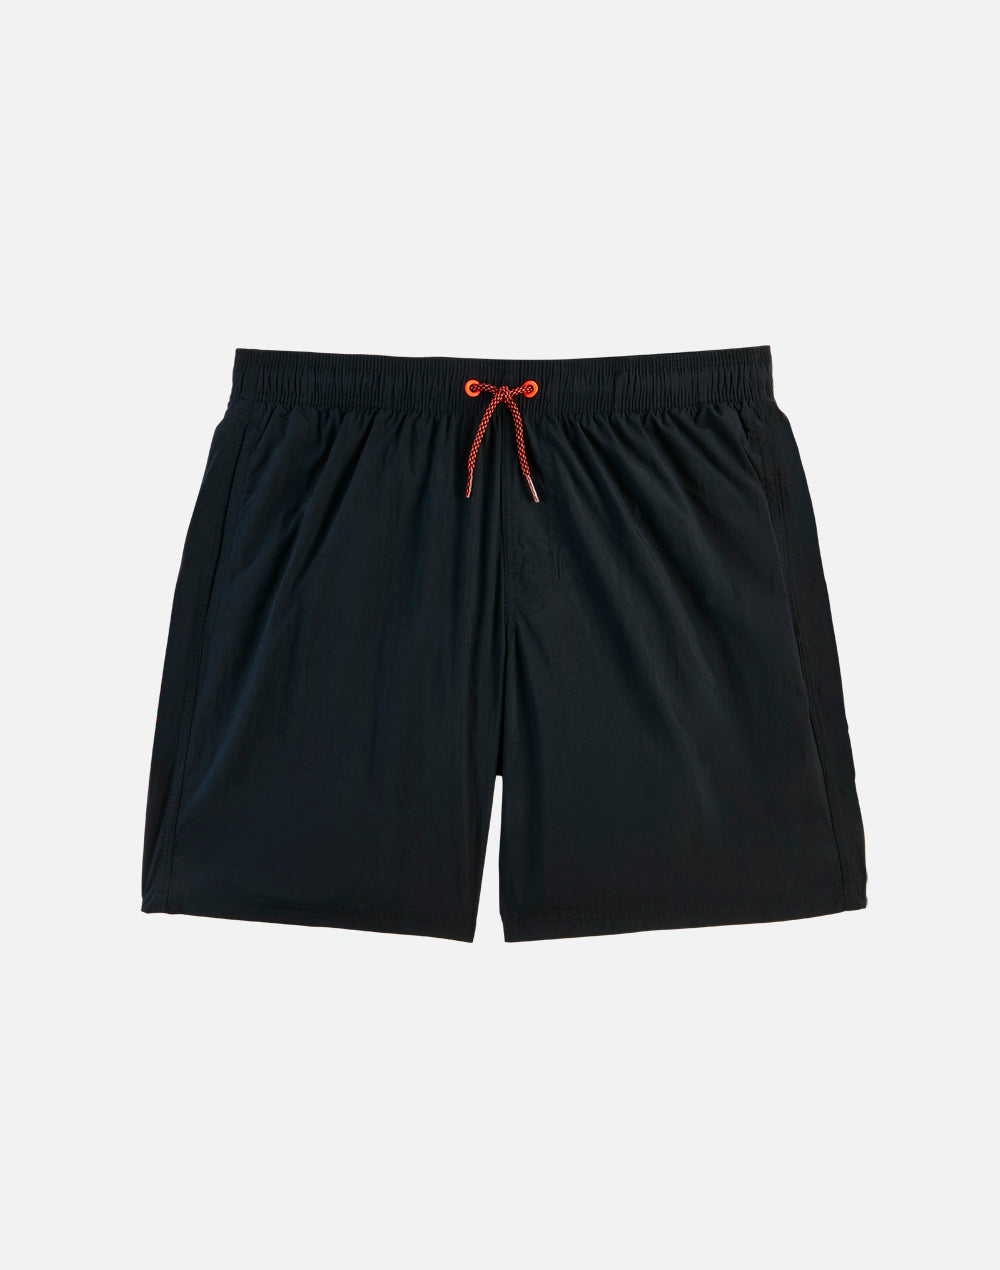 Sundek iconic taffeta mid-length swim shorts with an elasticated